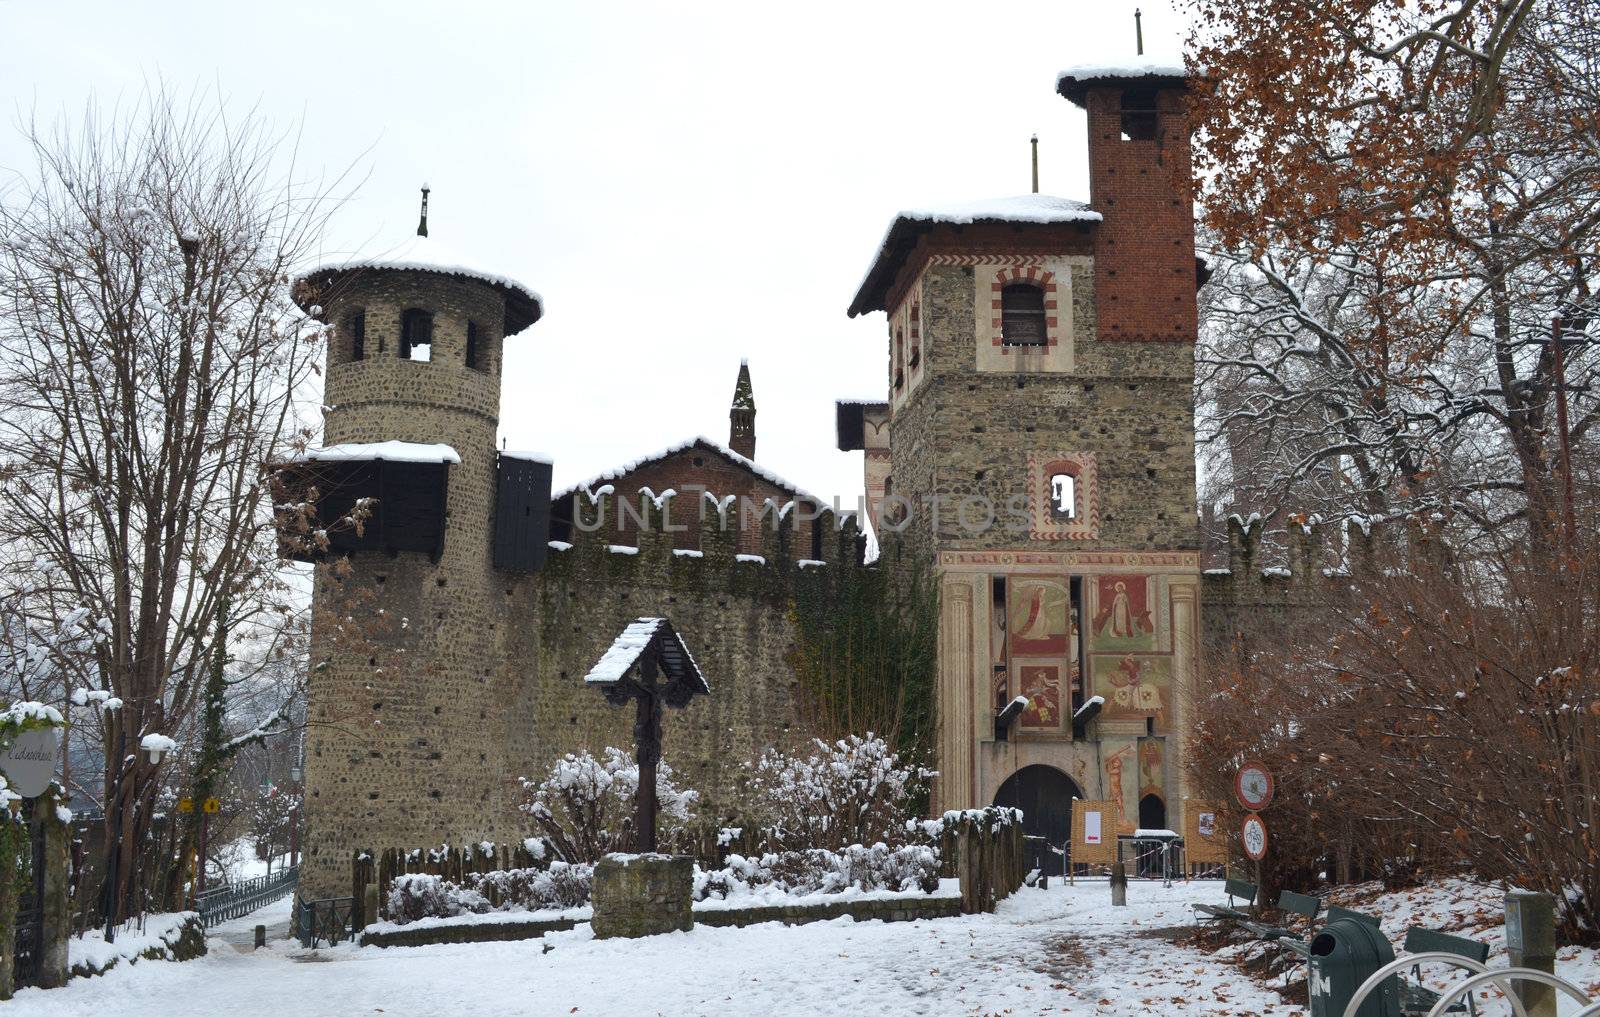 Medieval castle in Valentino Park, Turin by artofphoto